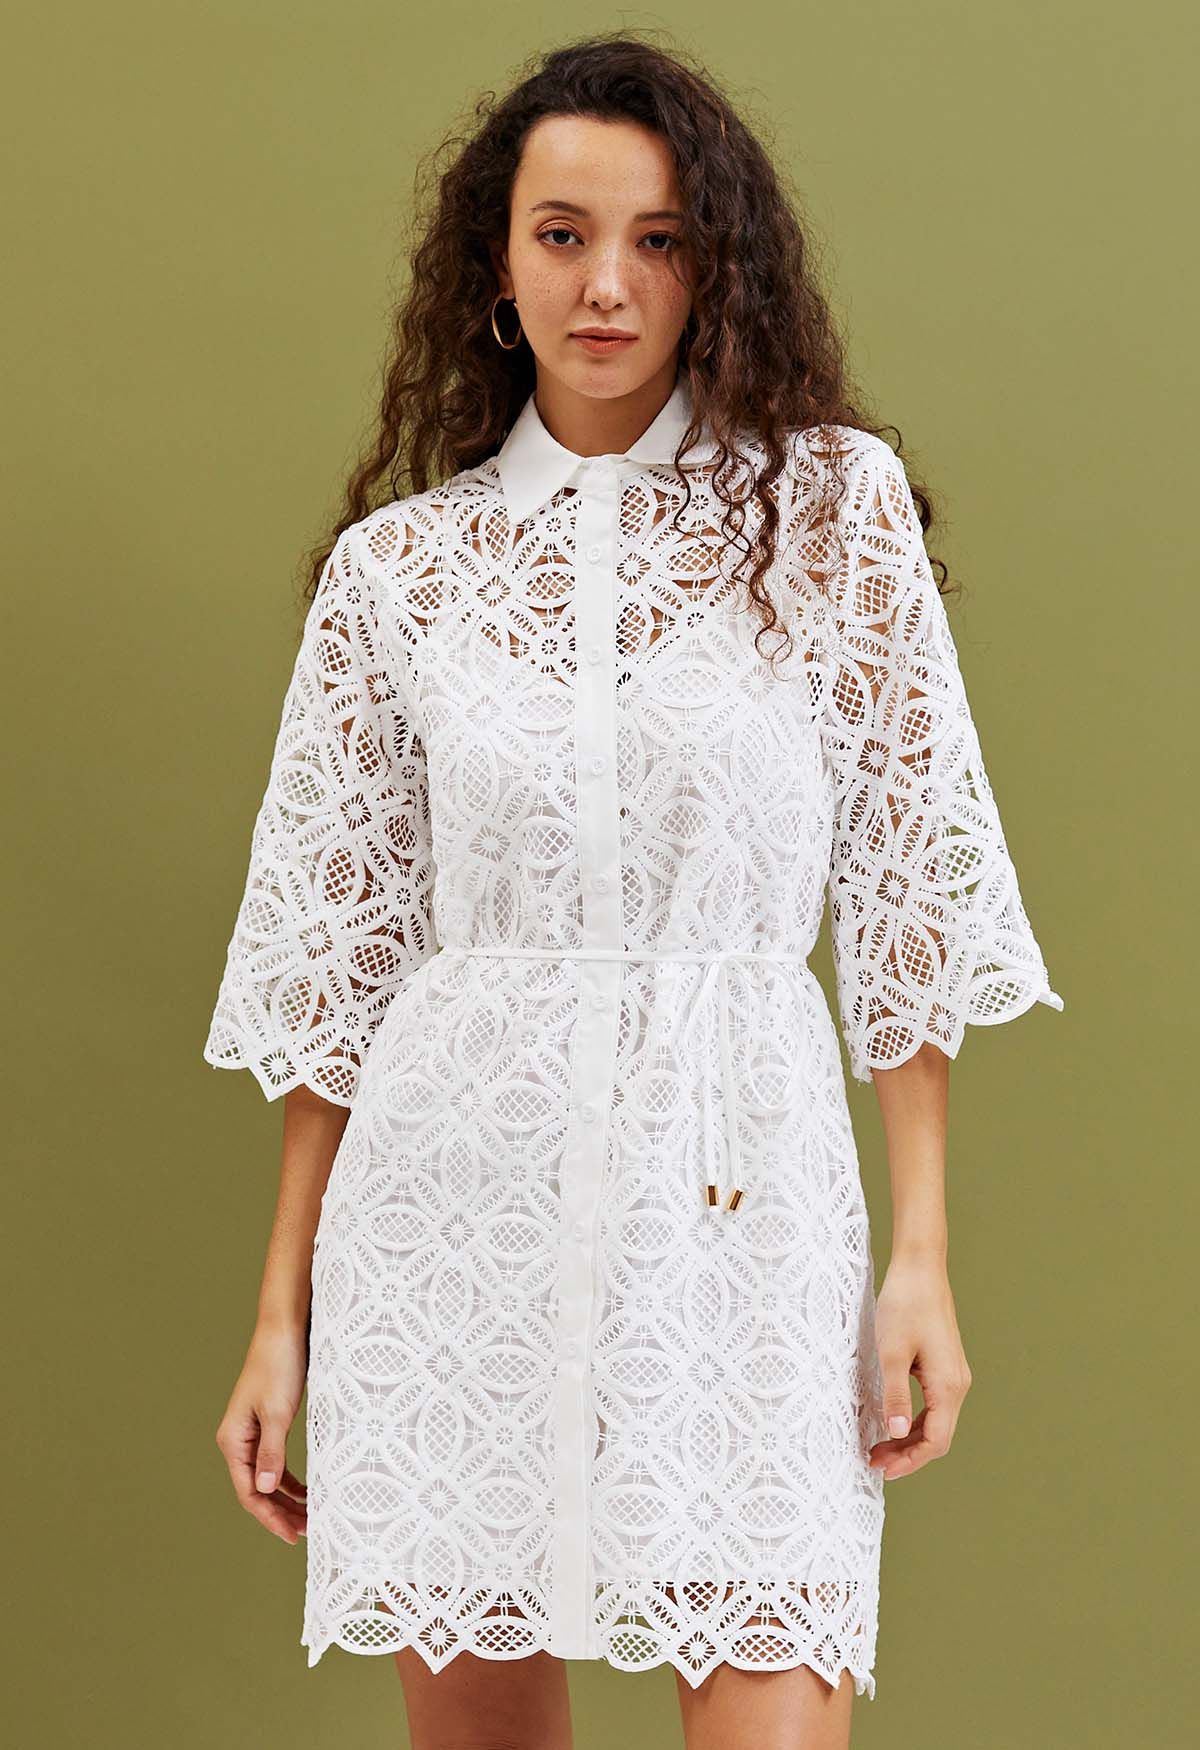 Delicate Cutwork Lace Button Down Dress in White